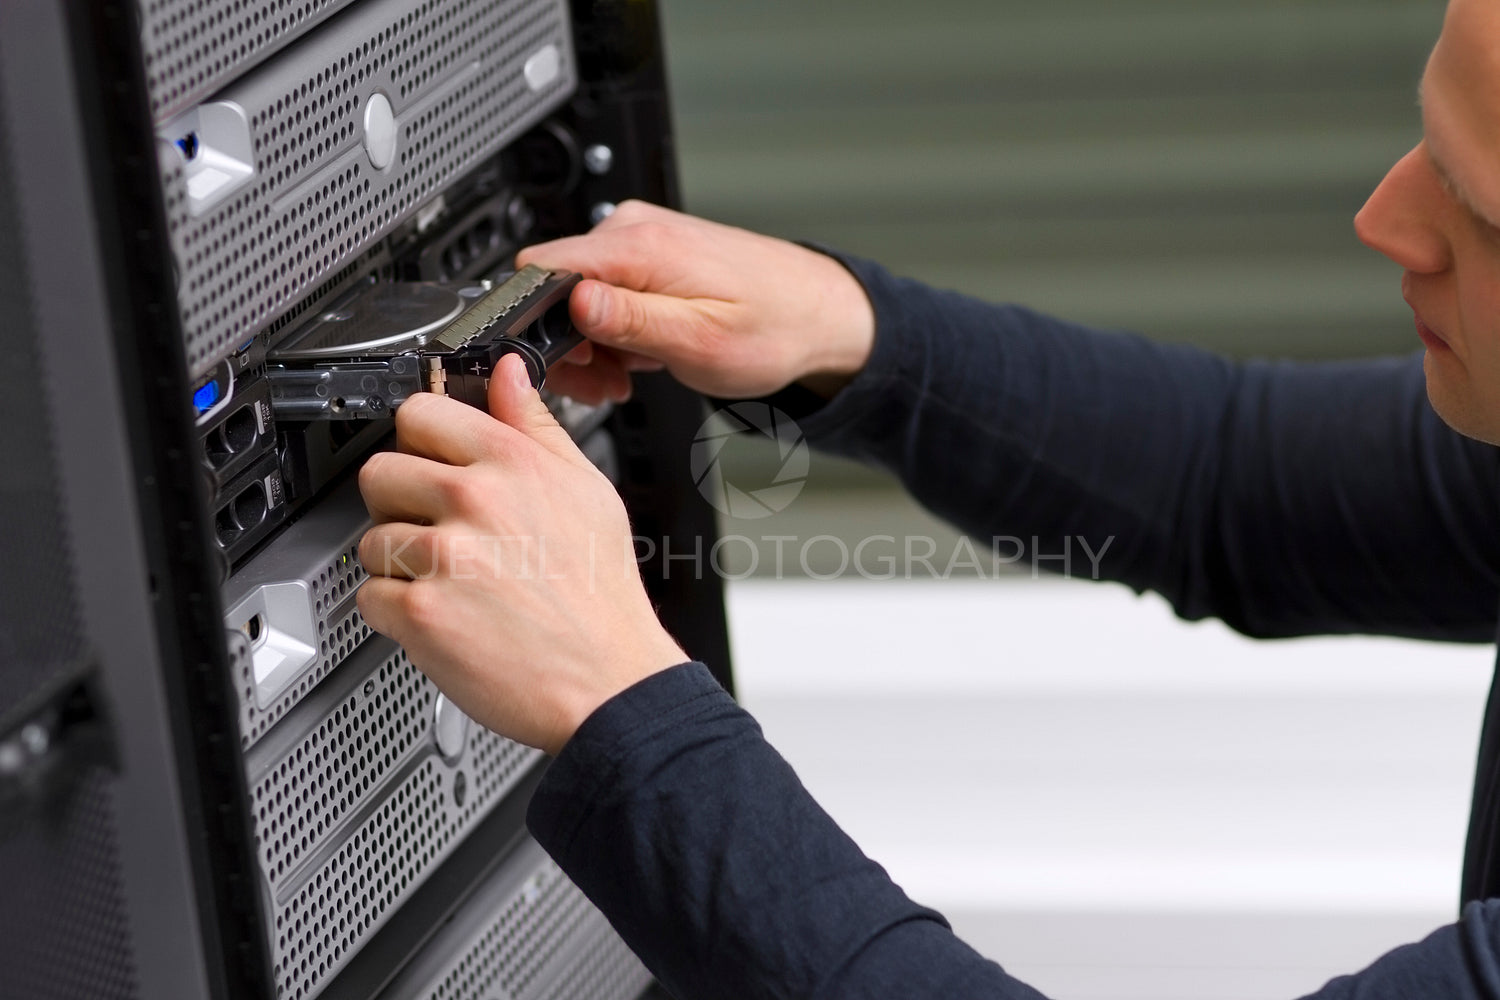 IT Technician Install a Harddrive